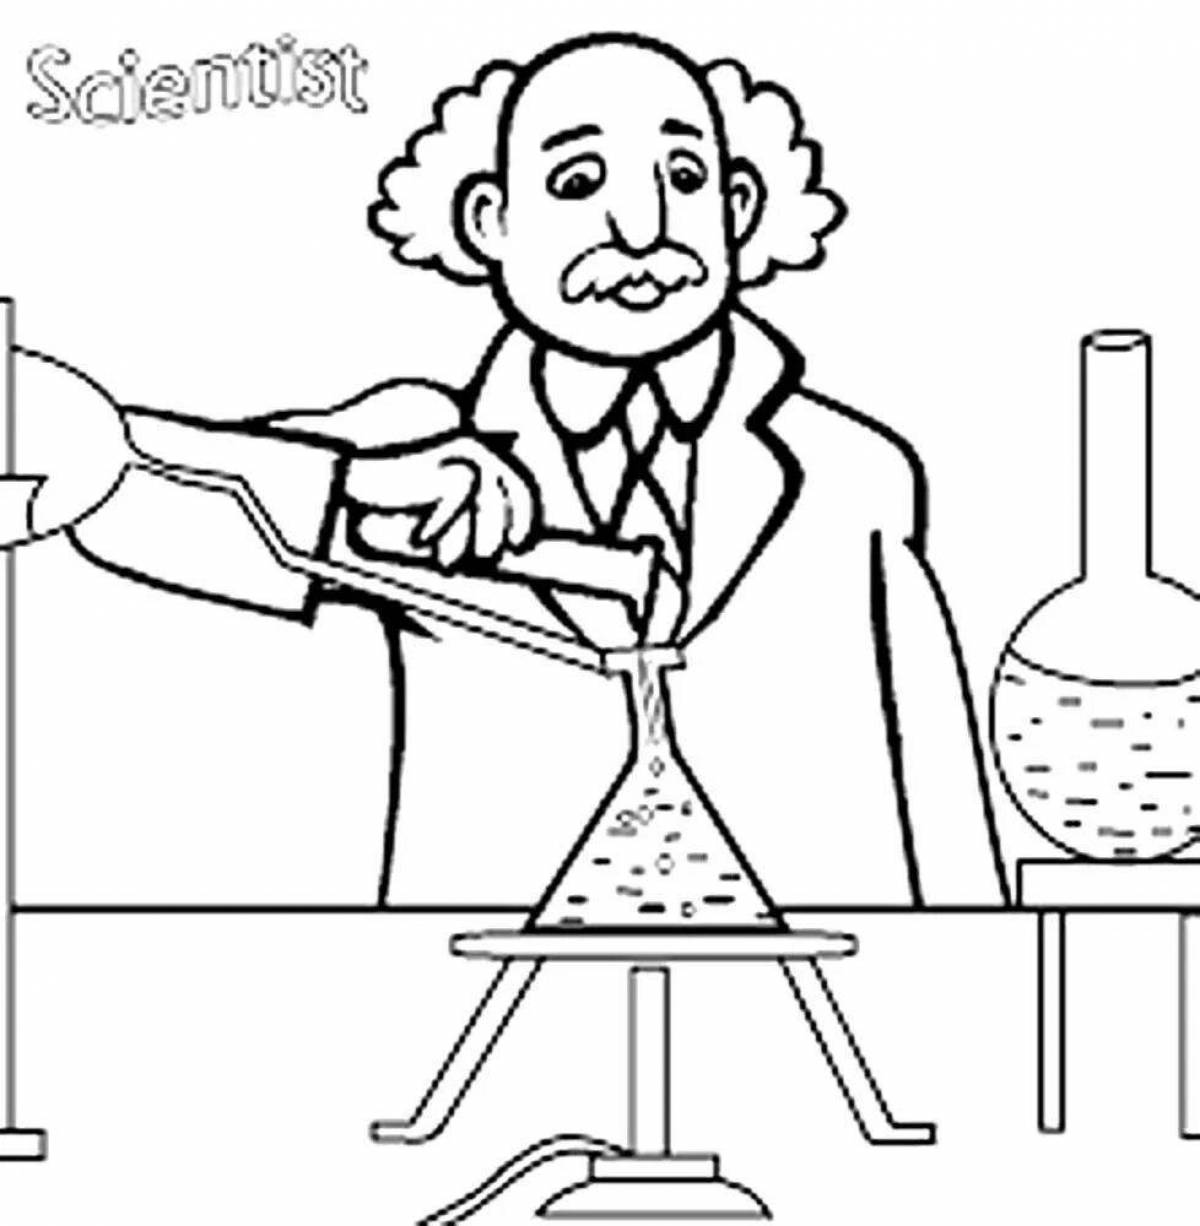 Chemist fun coloring book